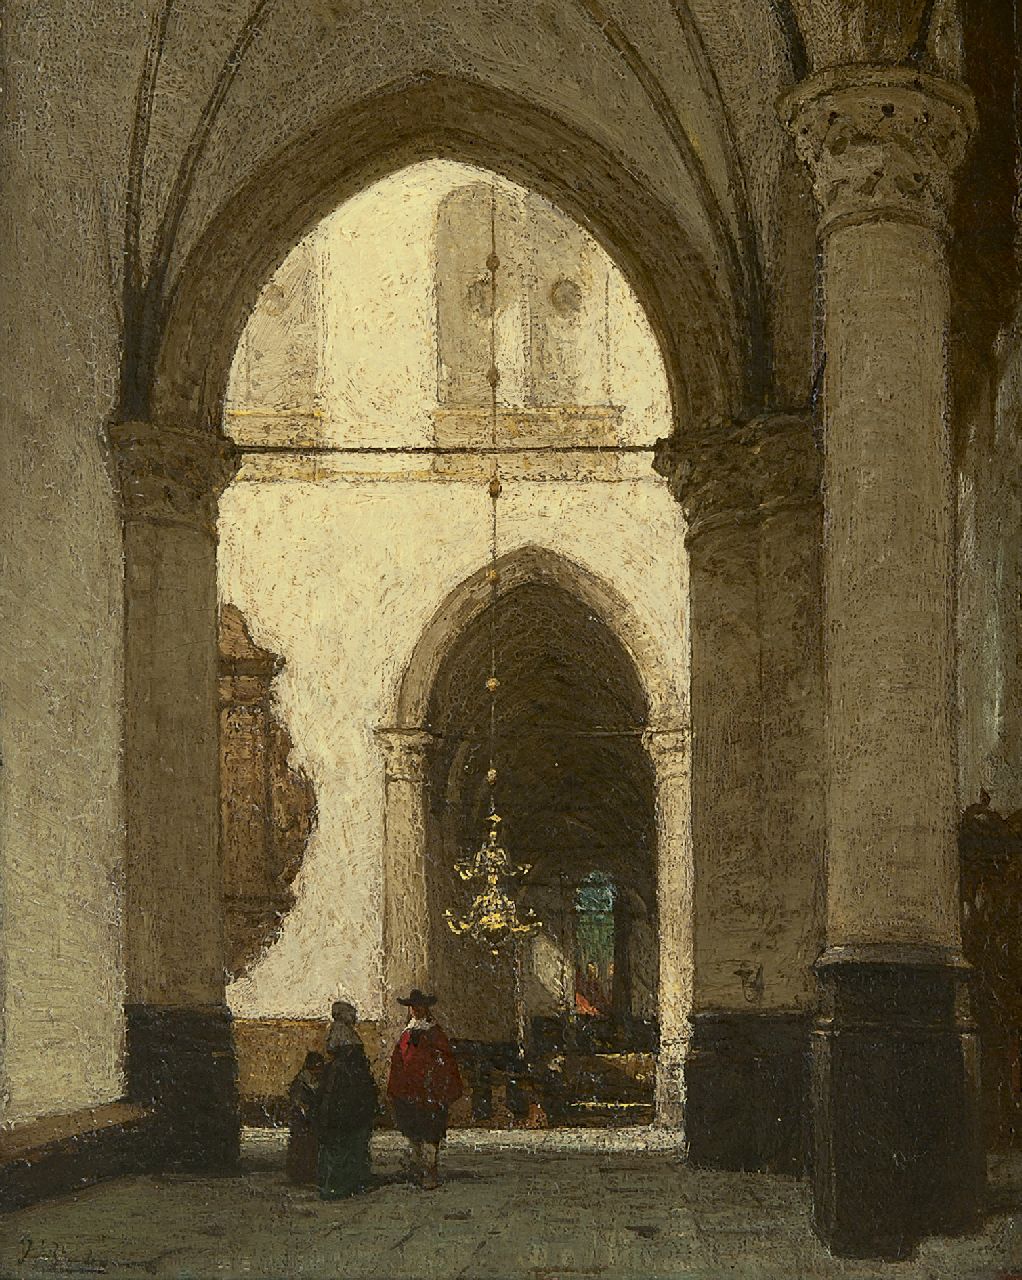 Bosboom J.  | Johannes Bosboom, De St. Laurenskerk, Alkmaar, olieverf op paneel 32,2 x 25,3 cm, gesigneerd linksonder